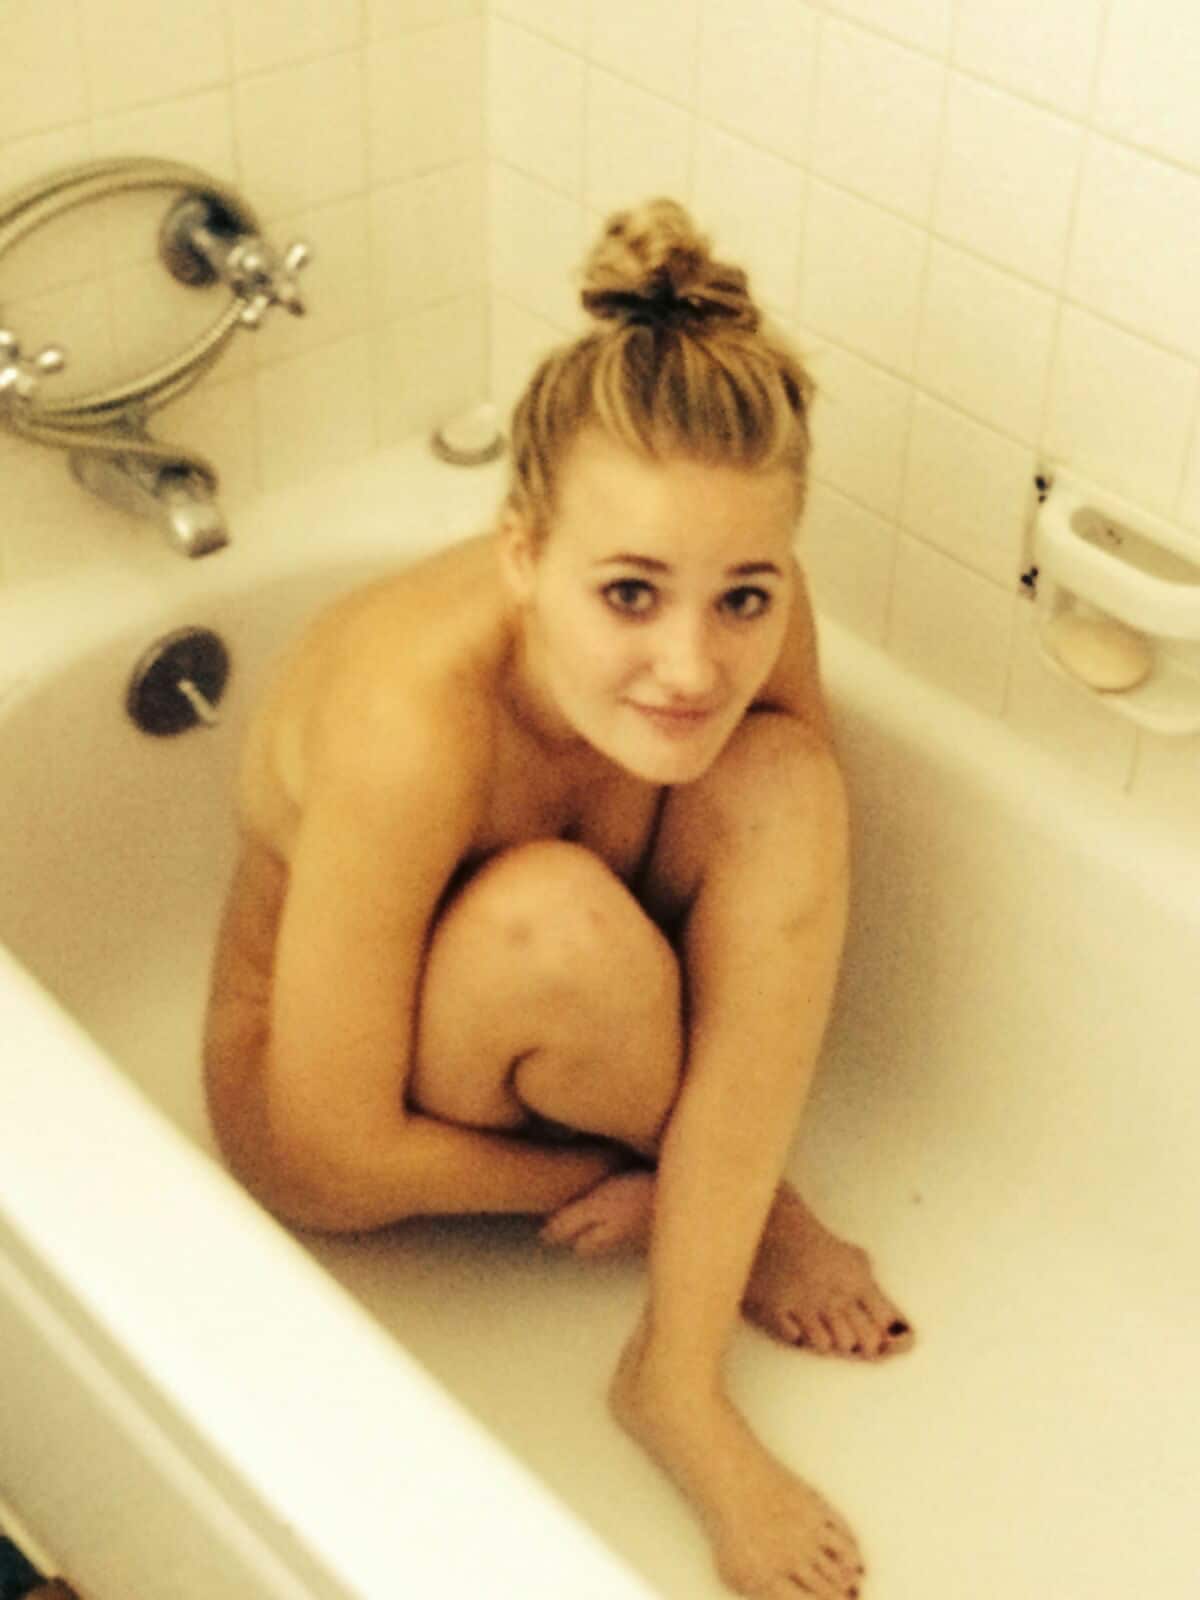 AJ Michalka completely naked in a bathtub